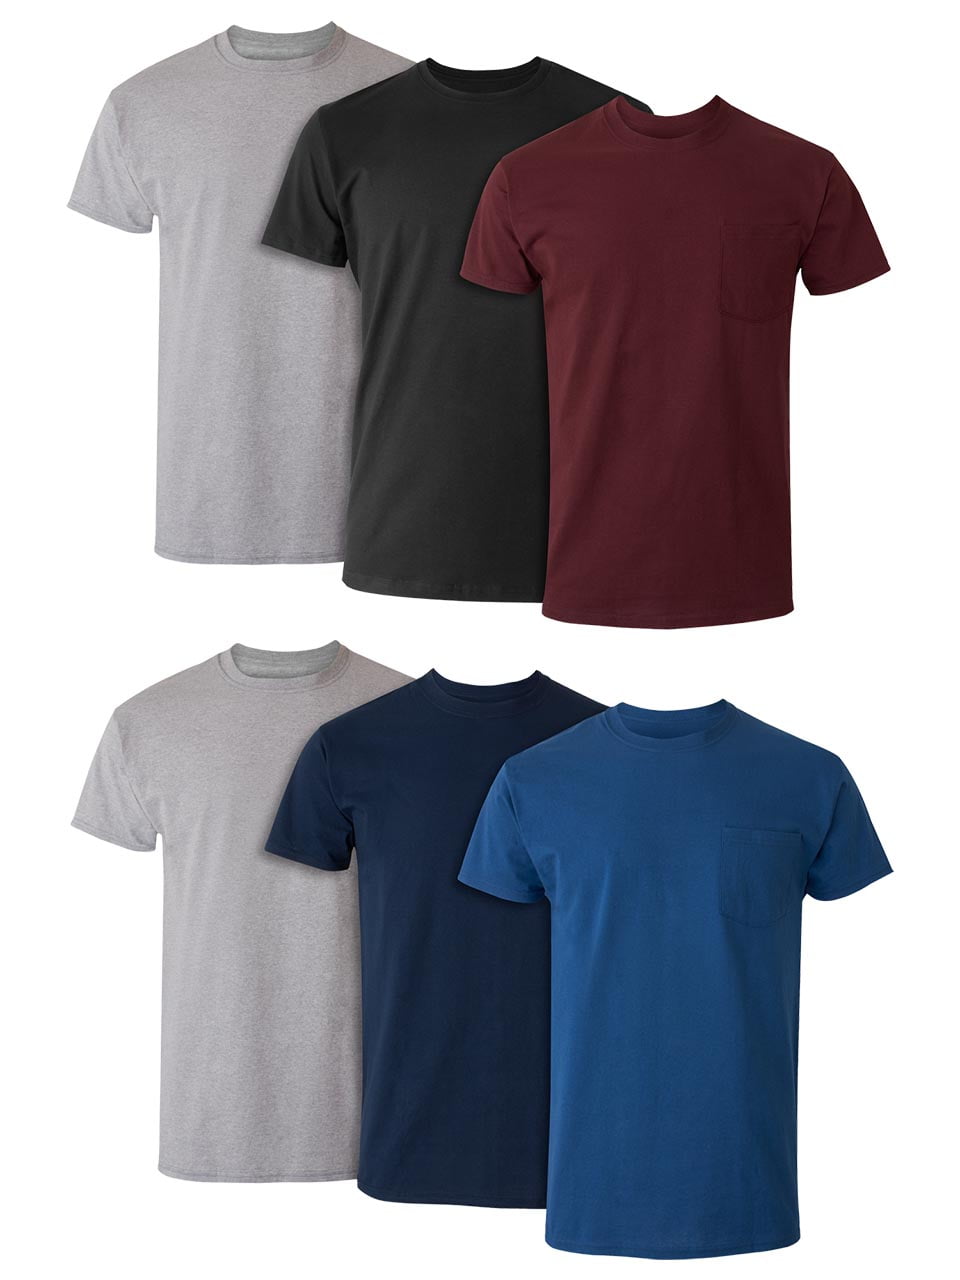 discount 94% Springfield Shirt Multicolored XL MEN FASHION Shirts & T-shirts Custom fit 